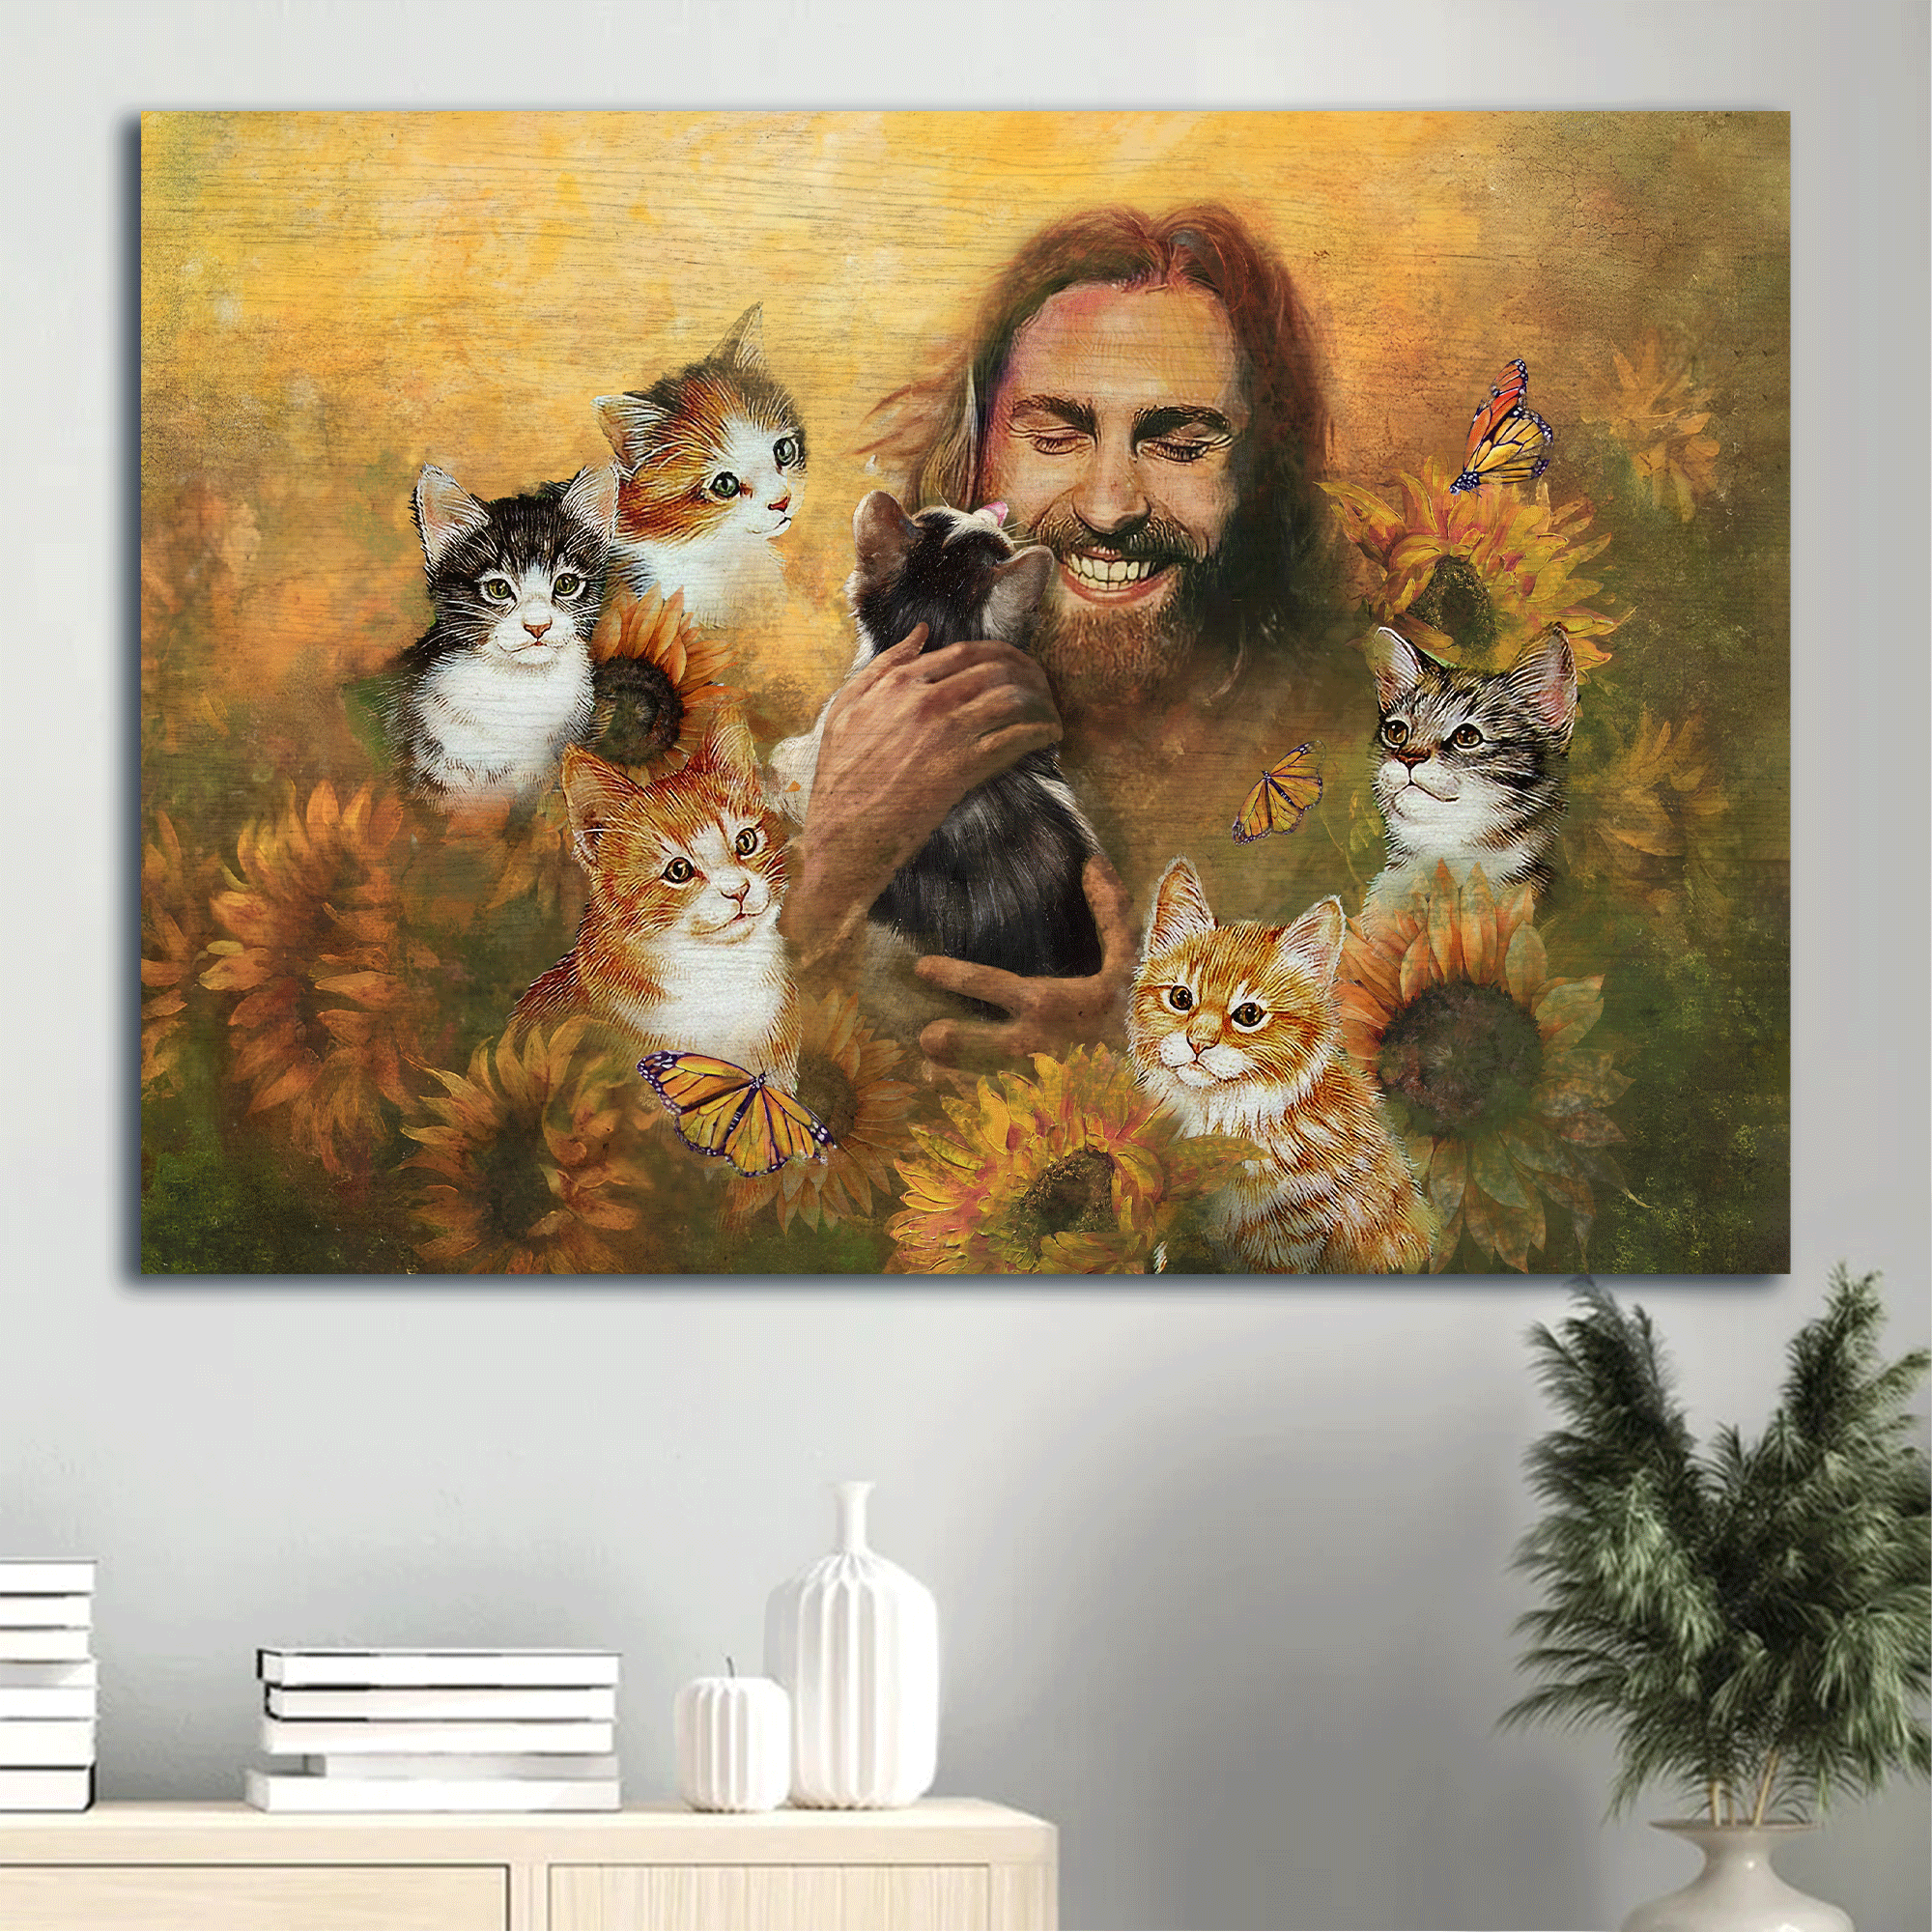 Jesus Landscape Canvas - Lovely cats, Sunflower field, Monarch butterfly, Jesus Christ among animals Landscape Canvas - Gift For Christian  Landscape Canvas Prints, Home Decor Wall Art